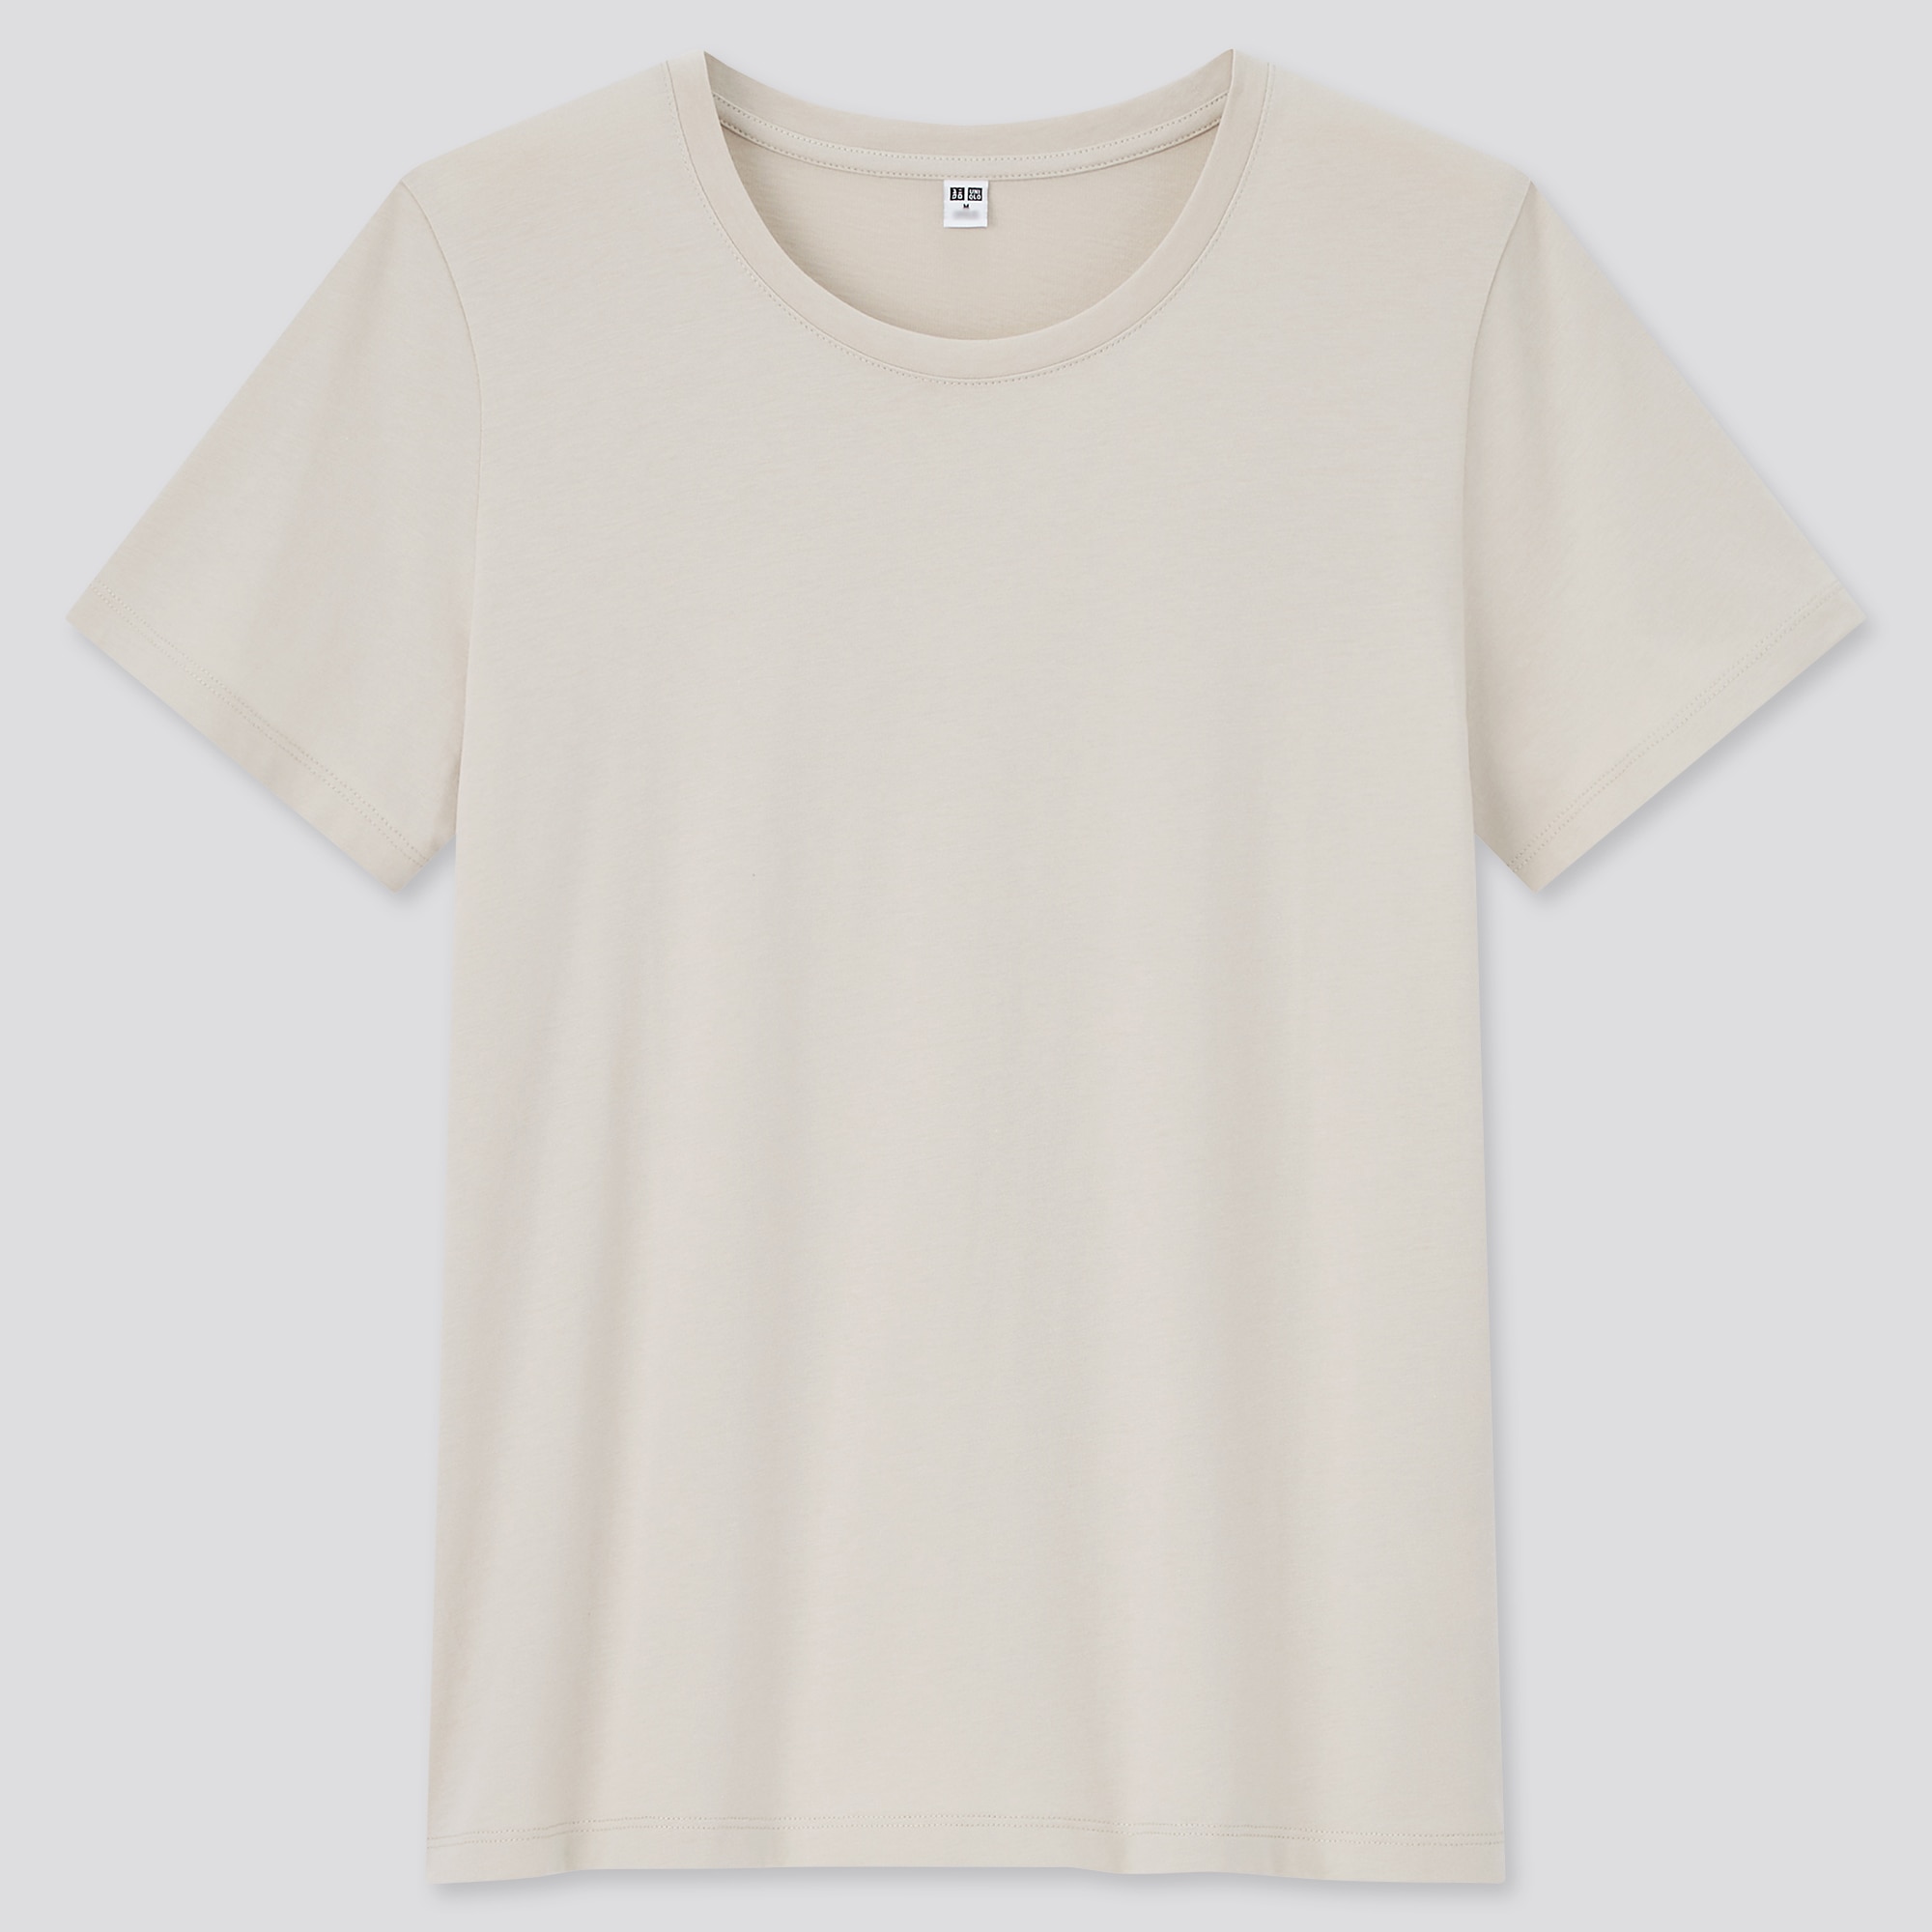 NWT Uniqlo Supima Cotton Green Cotton Crew Neck Short Sleeve T Shirt S   eBay